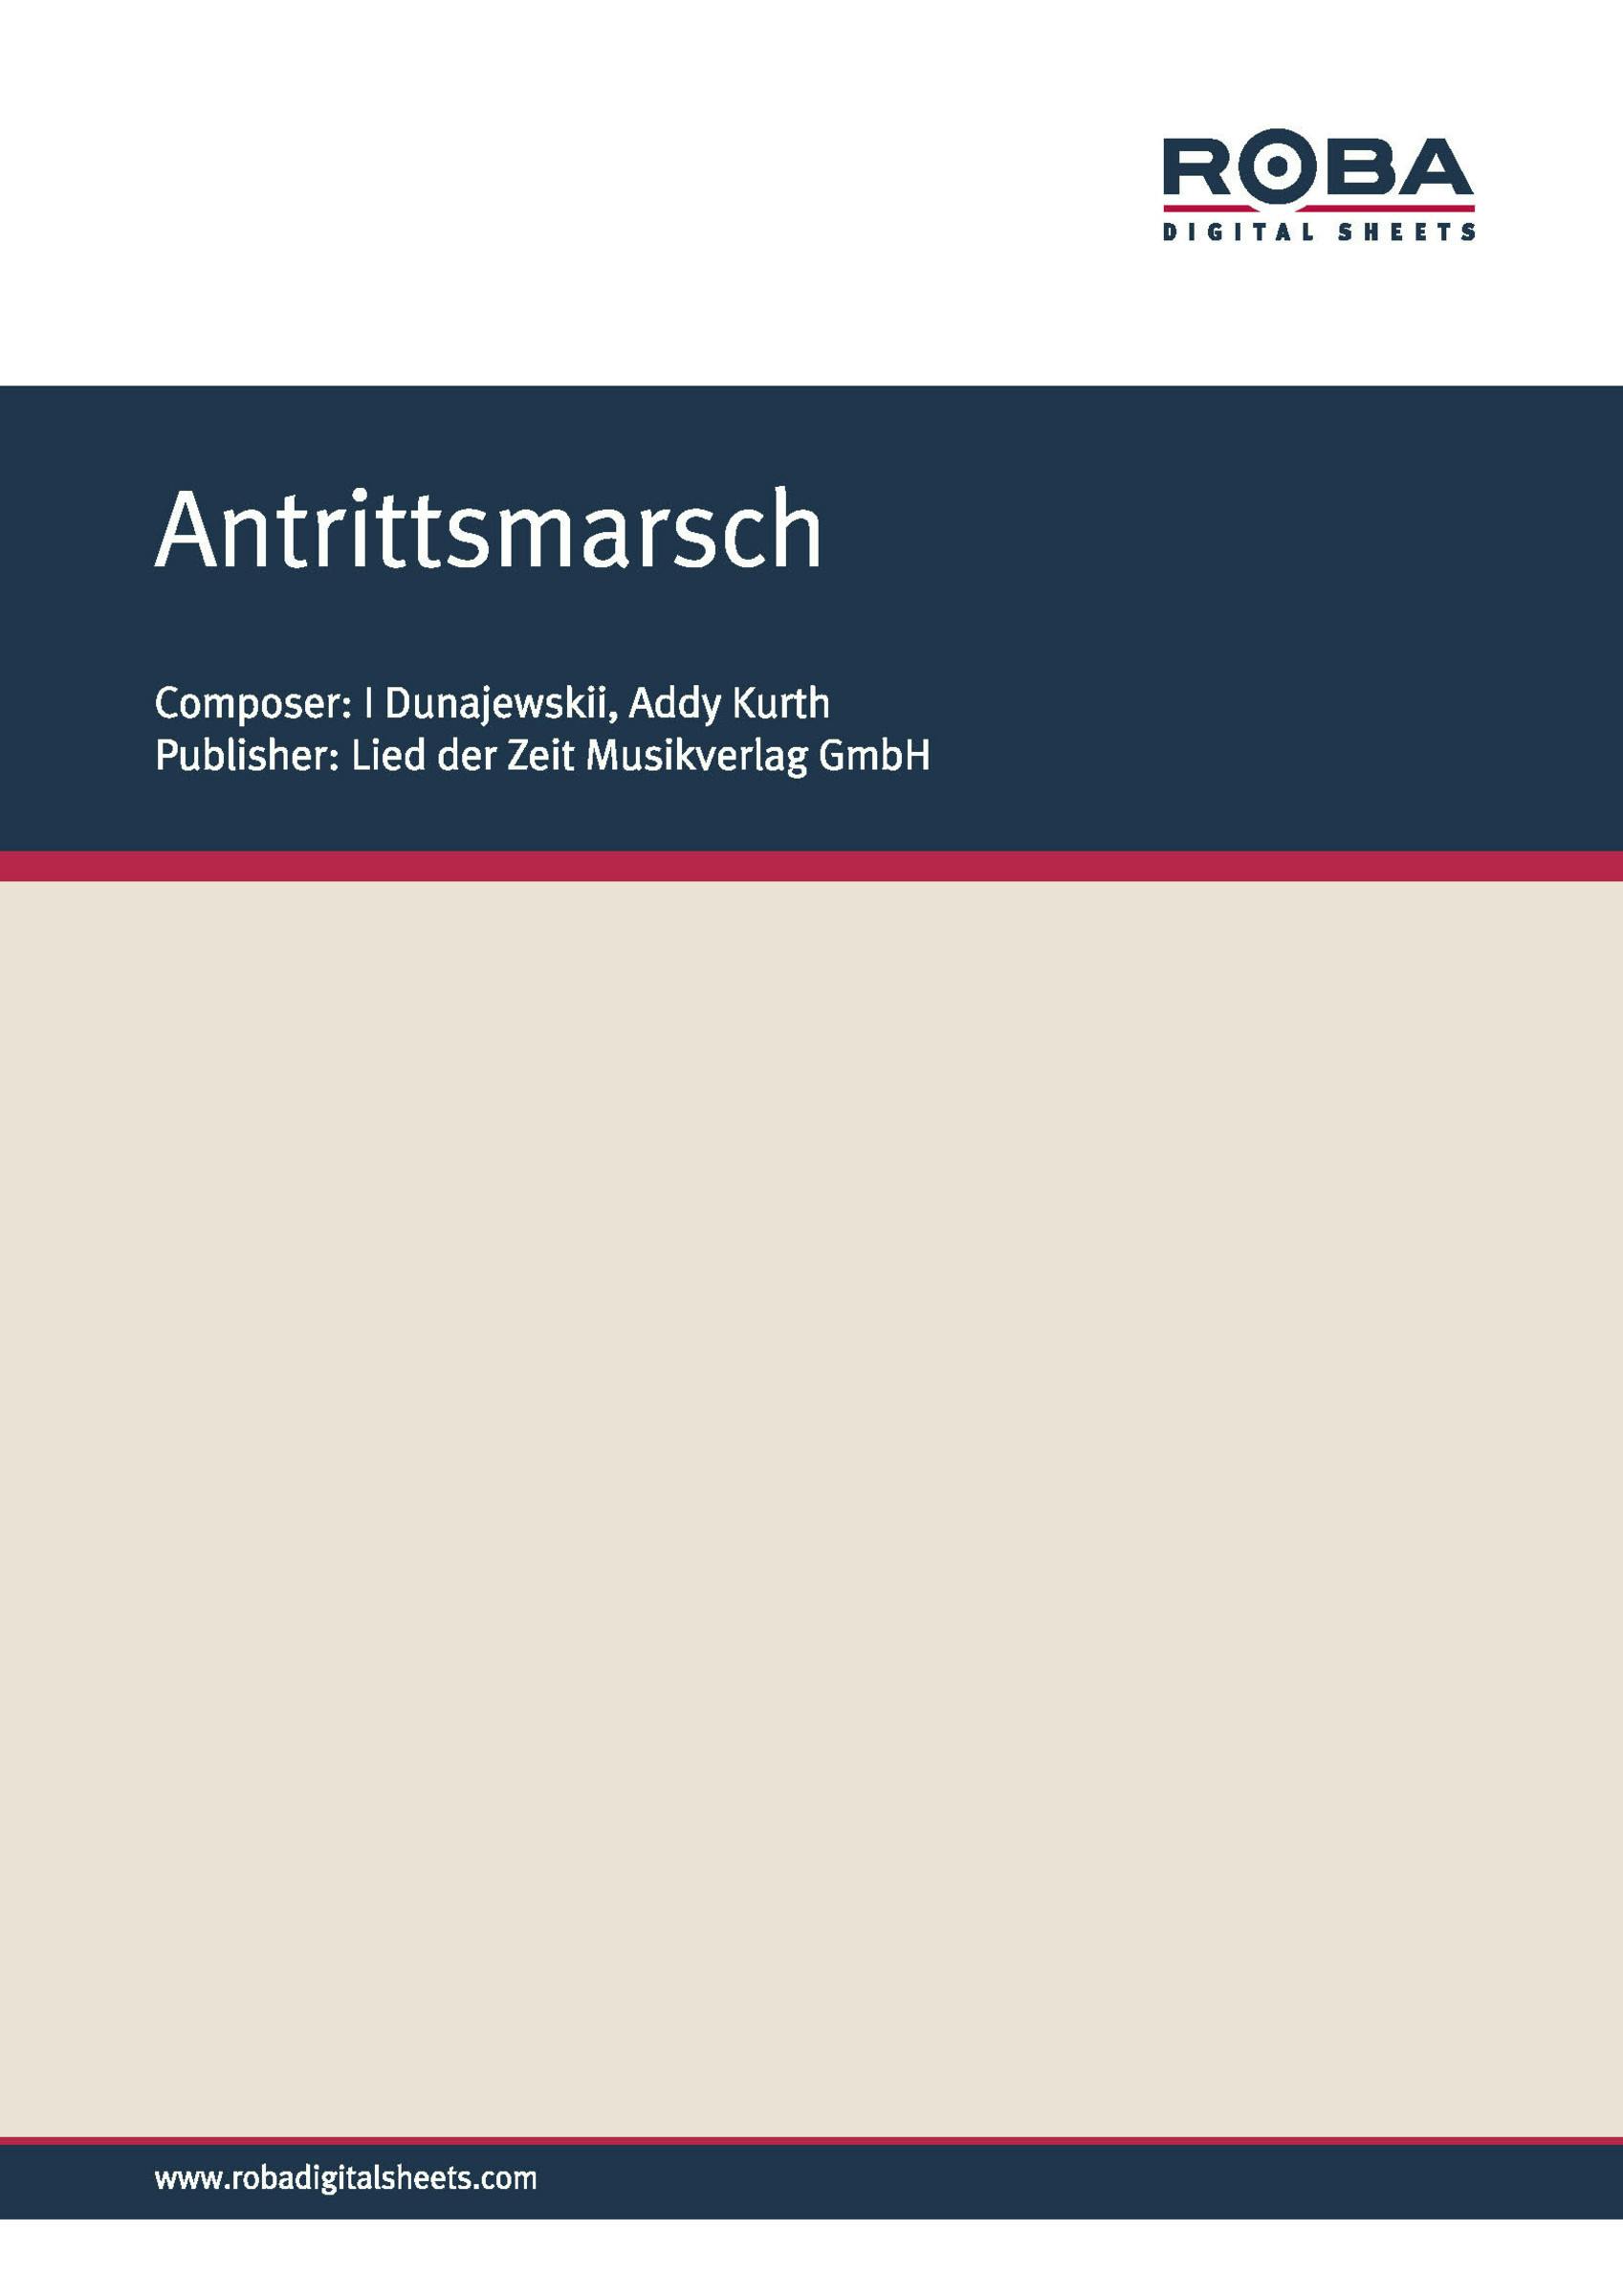 Antrittsmarsch - I. Dunajewskii, Addy Kurth